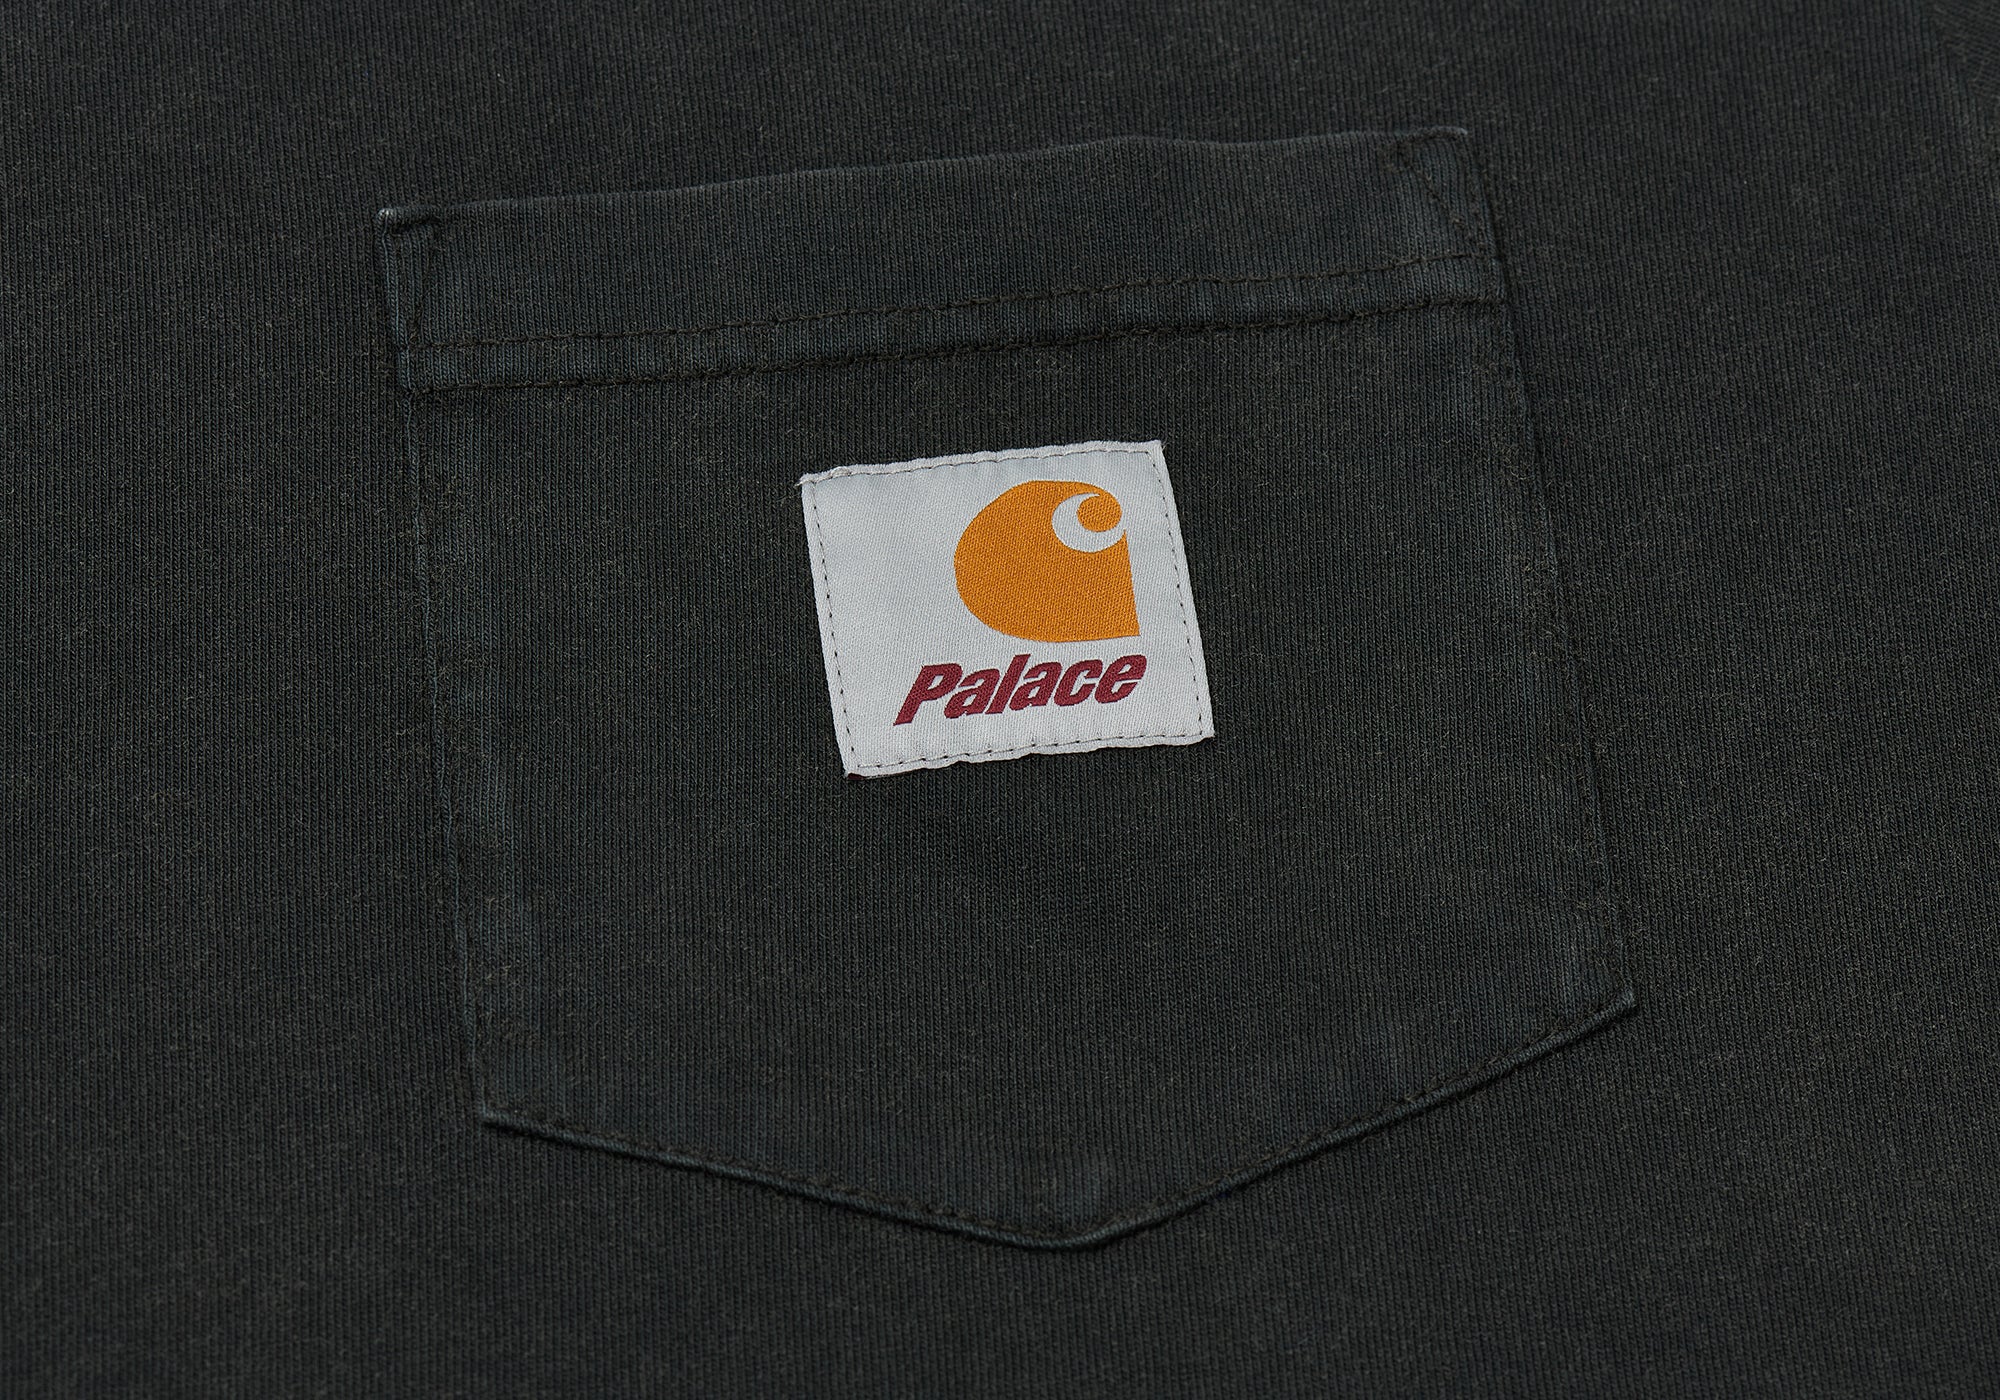 Palace Carhartt Wip S/s Pocket T-Shirt Black - Palace Carhartt WIP 